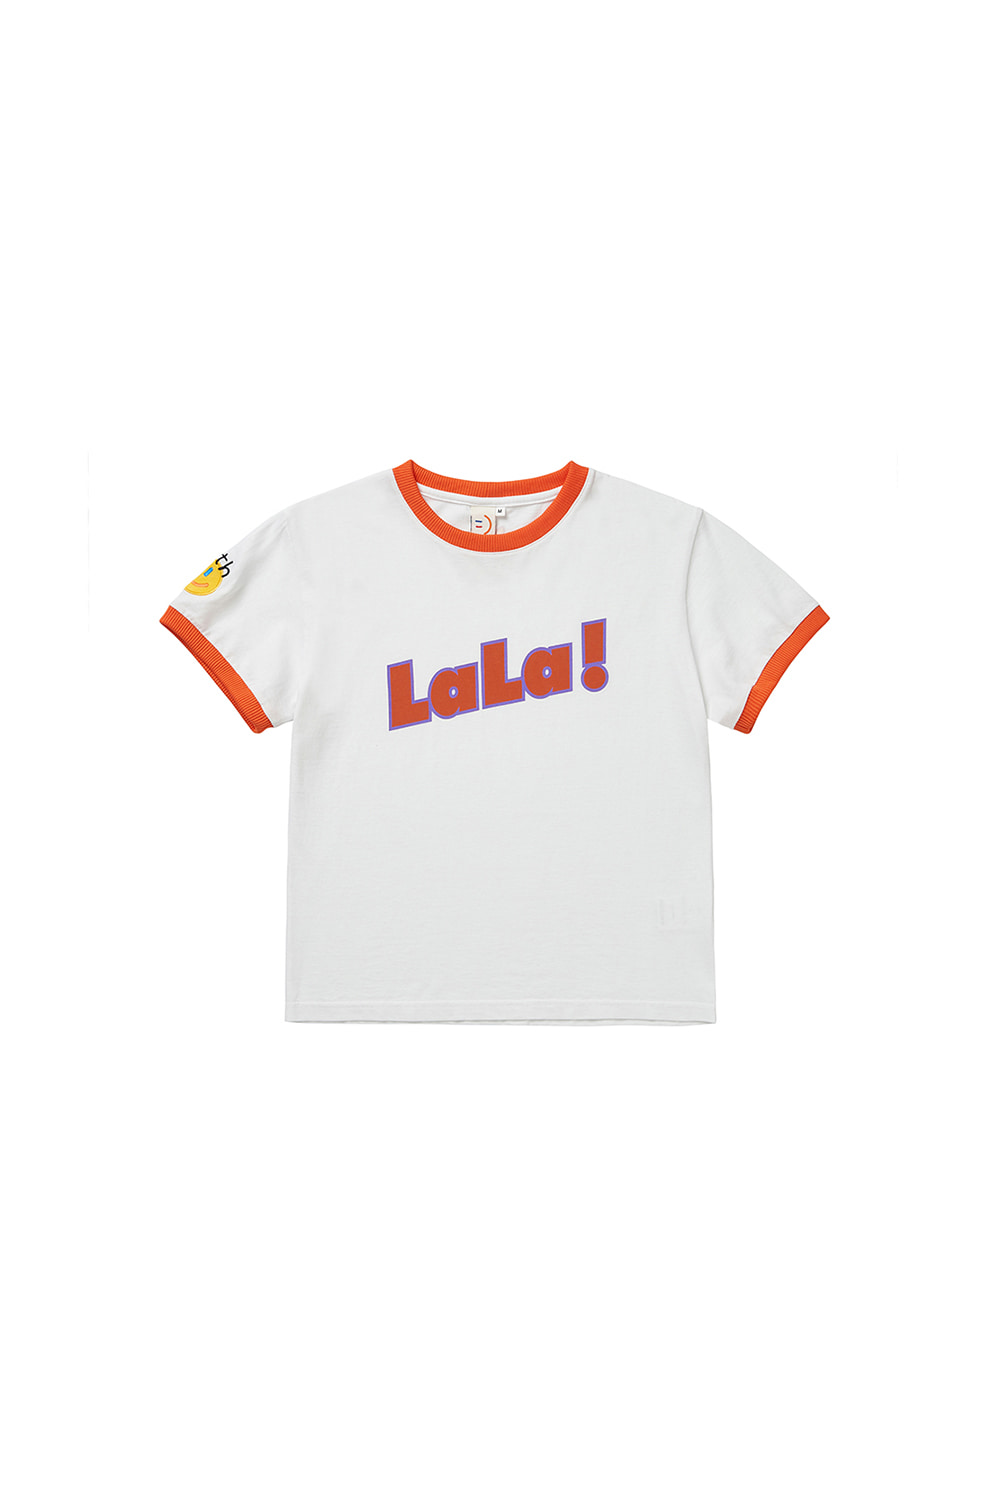 LaLa Kids Twotone T-shirt [Orange]